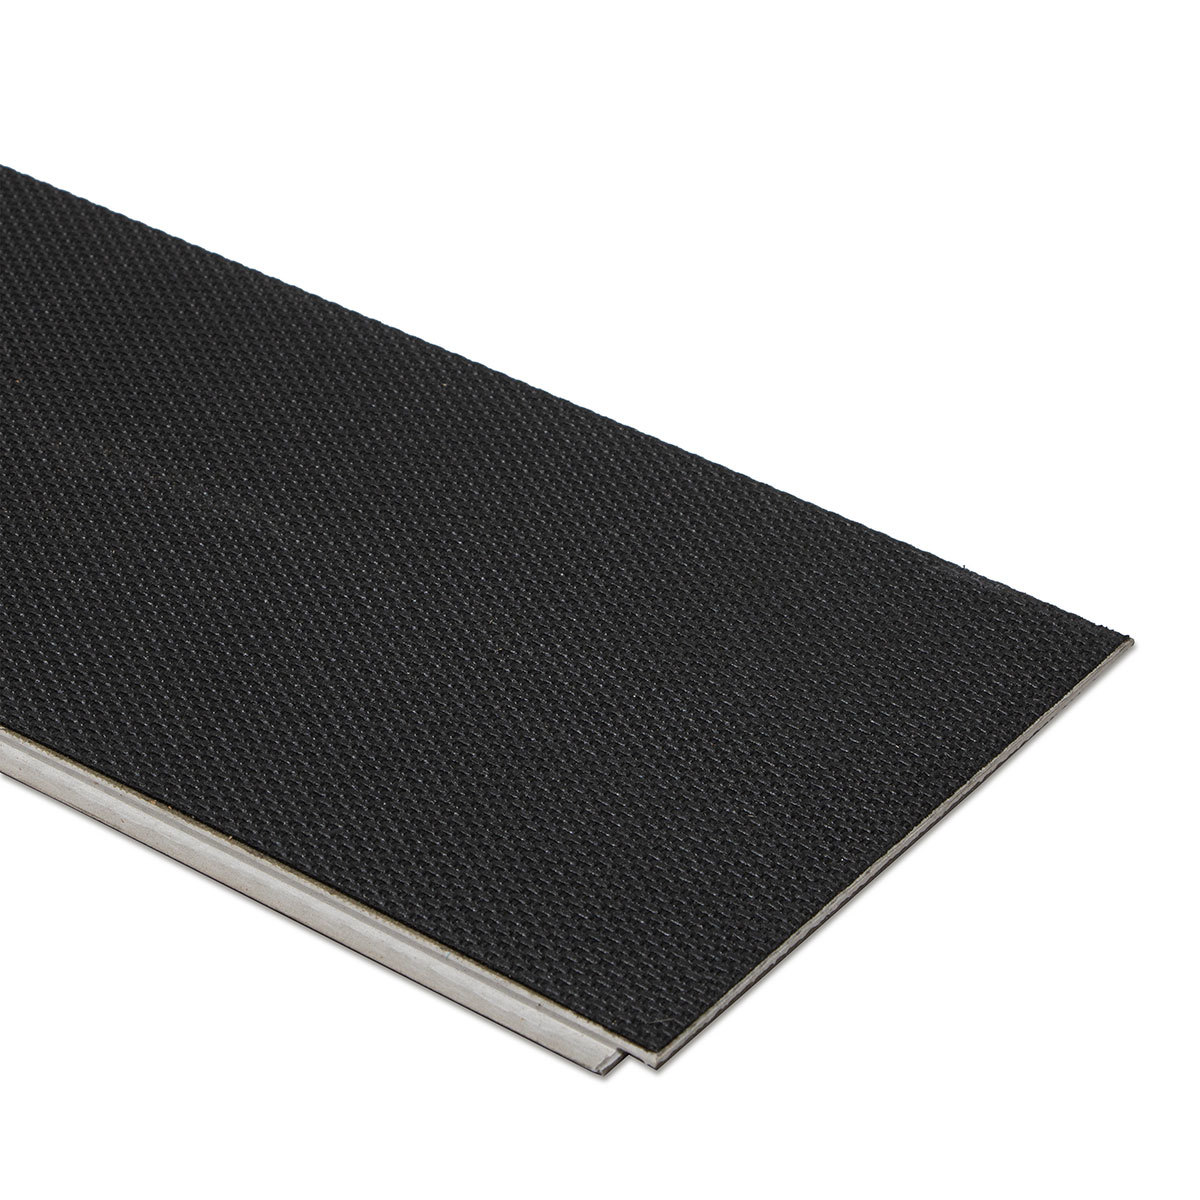 Golden Select Harbour (Grey) Waterproof Engineered  Hardwood Plank Flooring with Foam Underlay - 1.44 m² Per Pack